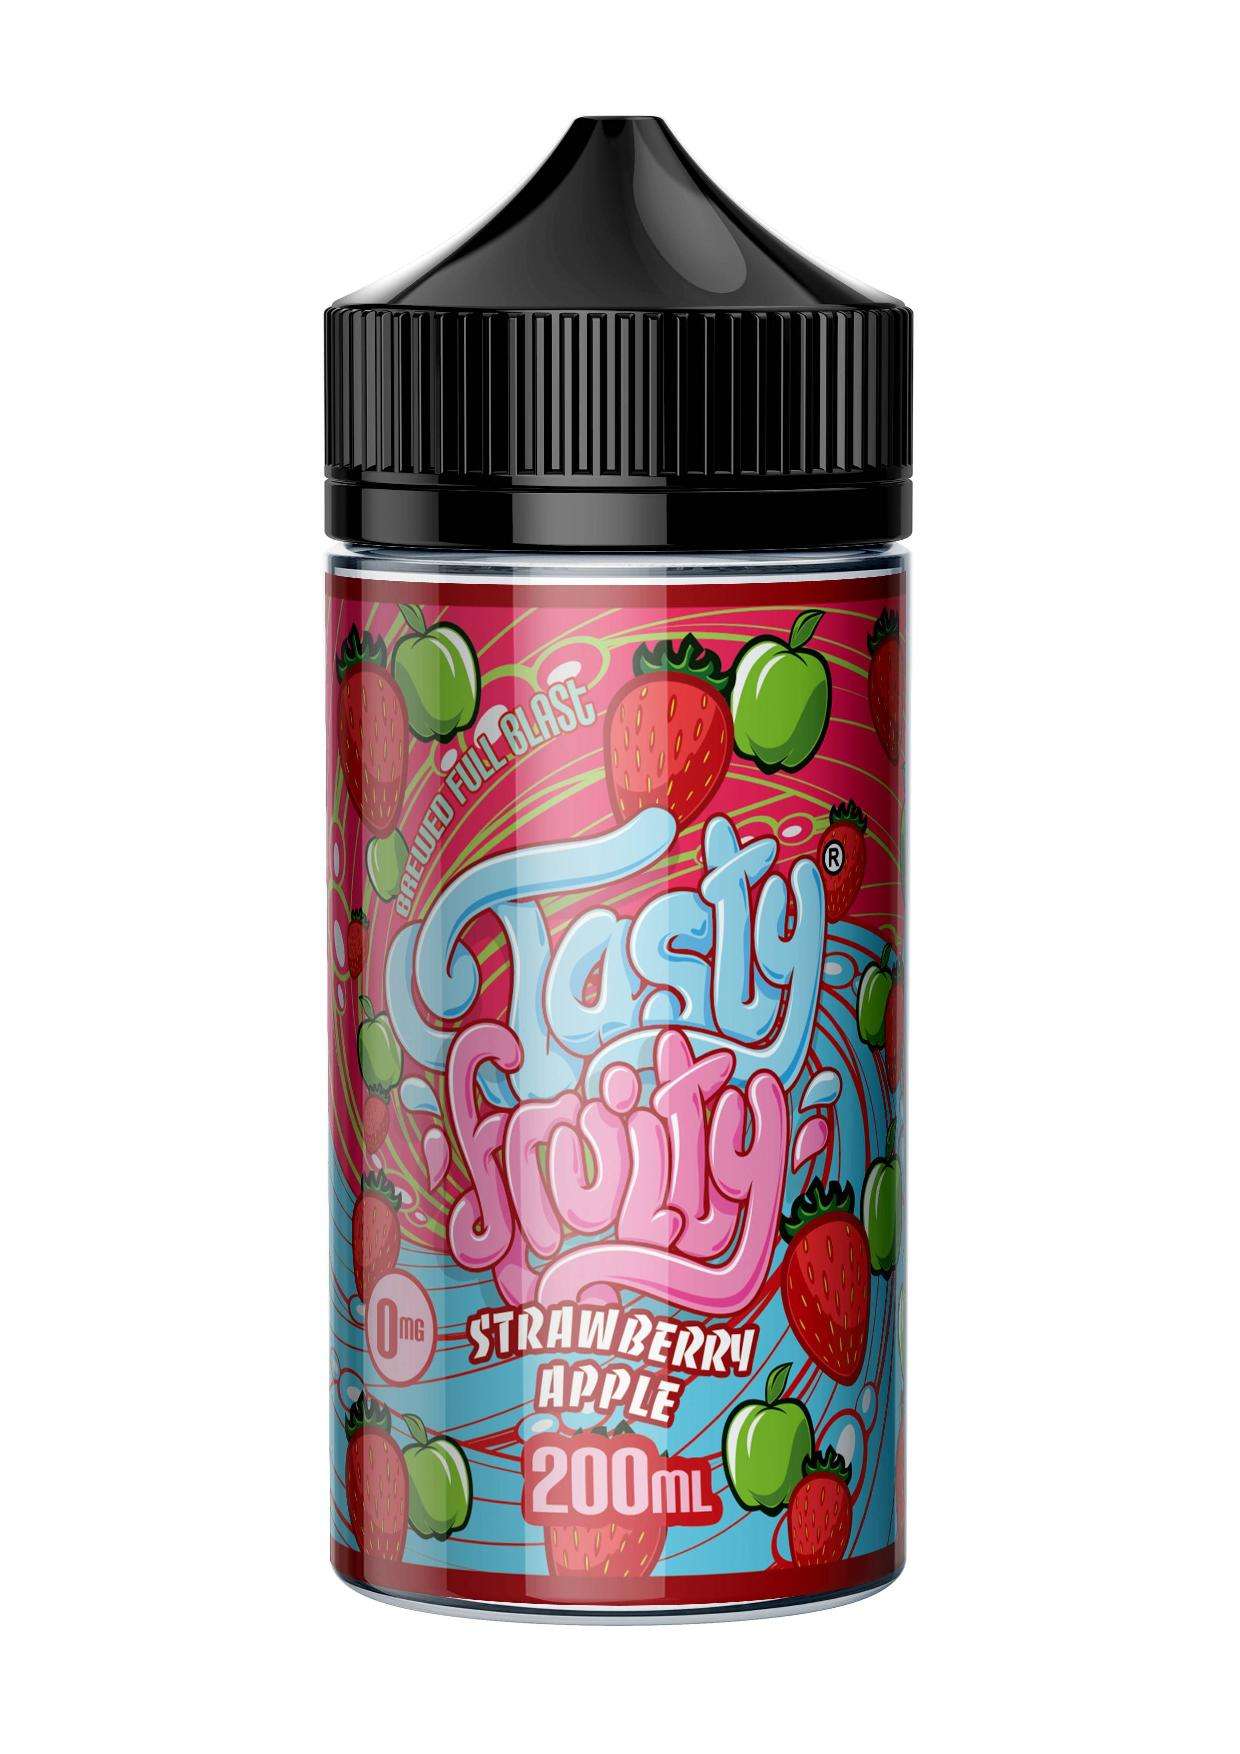  Tasty Fruity - Strawberry Apple - 200ml 